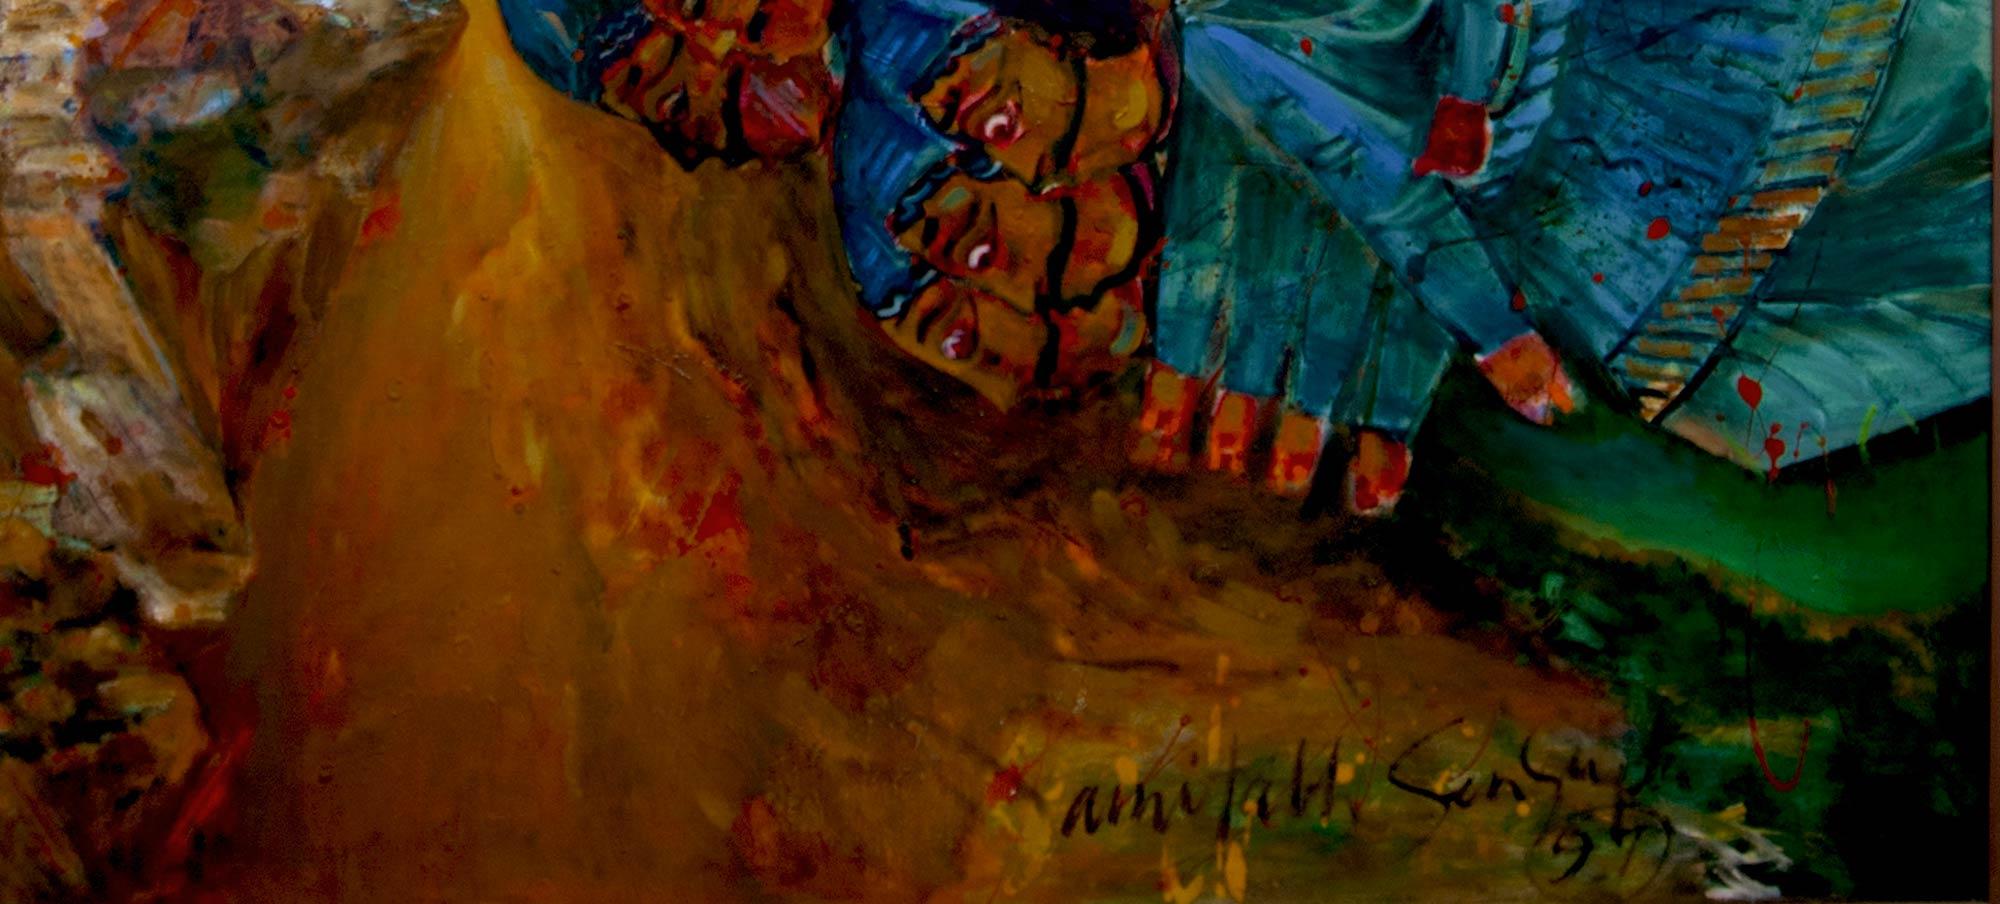 ramayana oil paintings